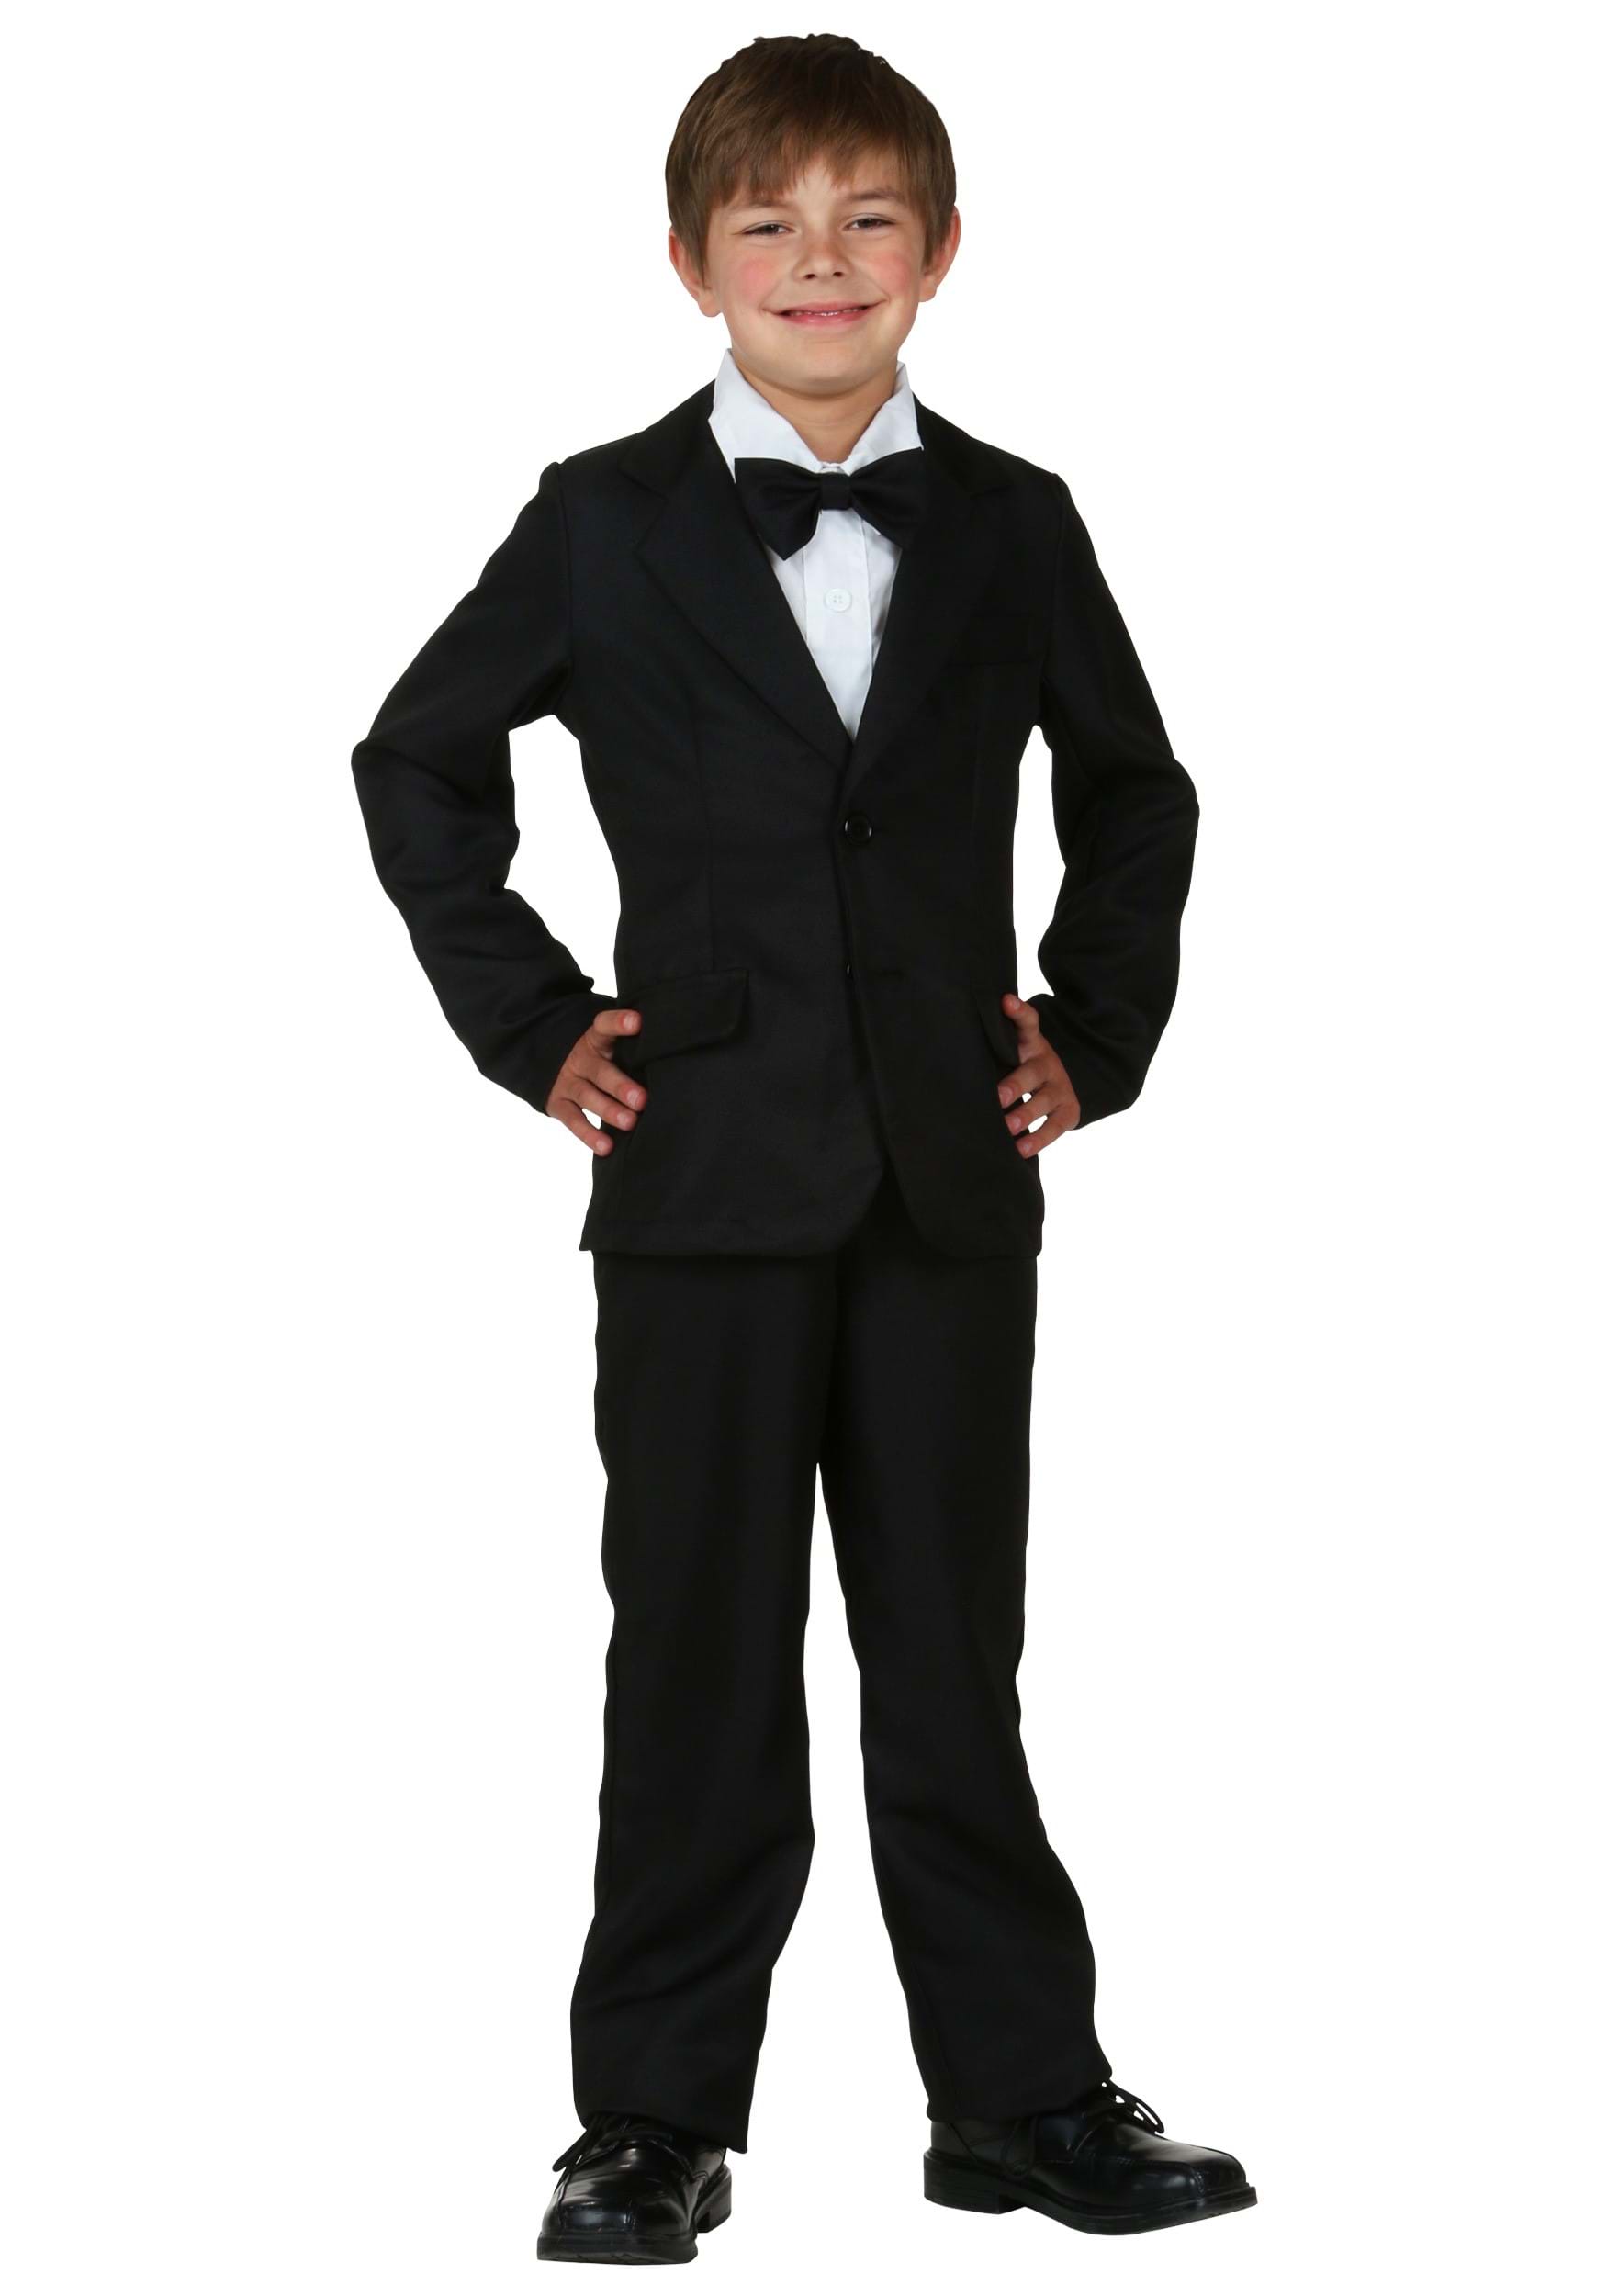 Photos - Fancy Dress FUN Costumes Black Suit for Kids Costume Black FUN1111BKCH